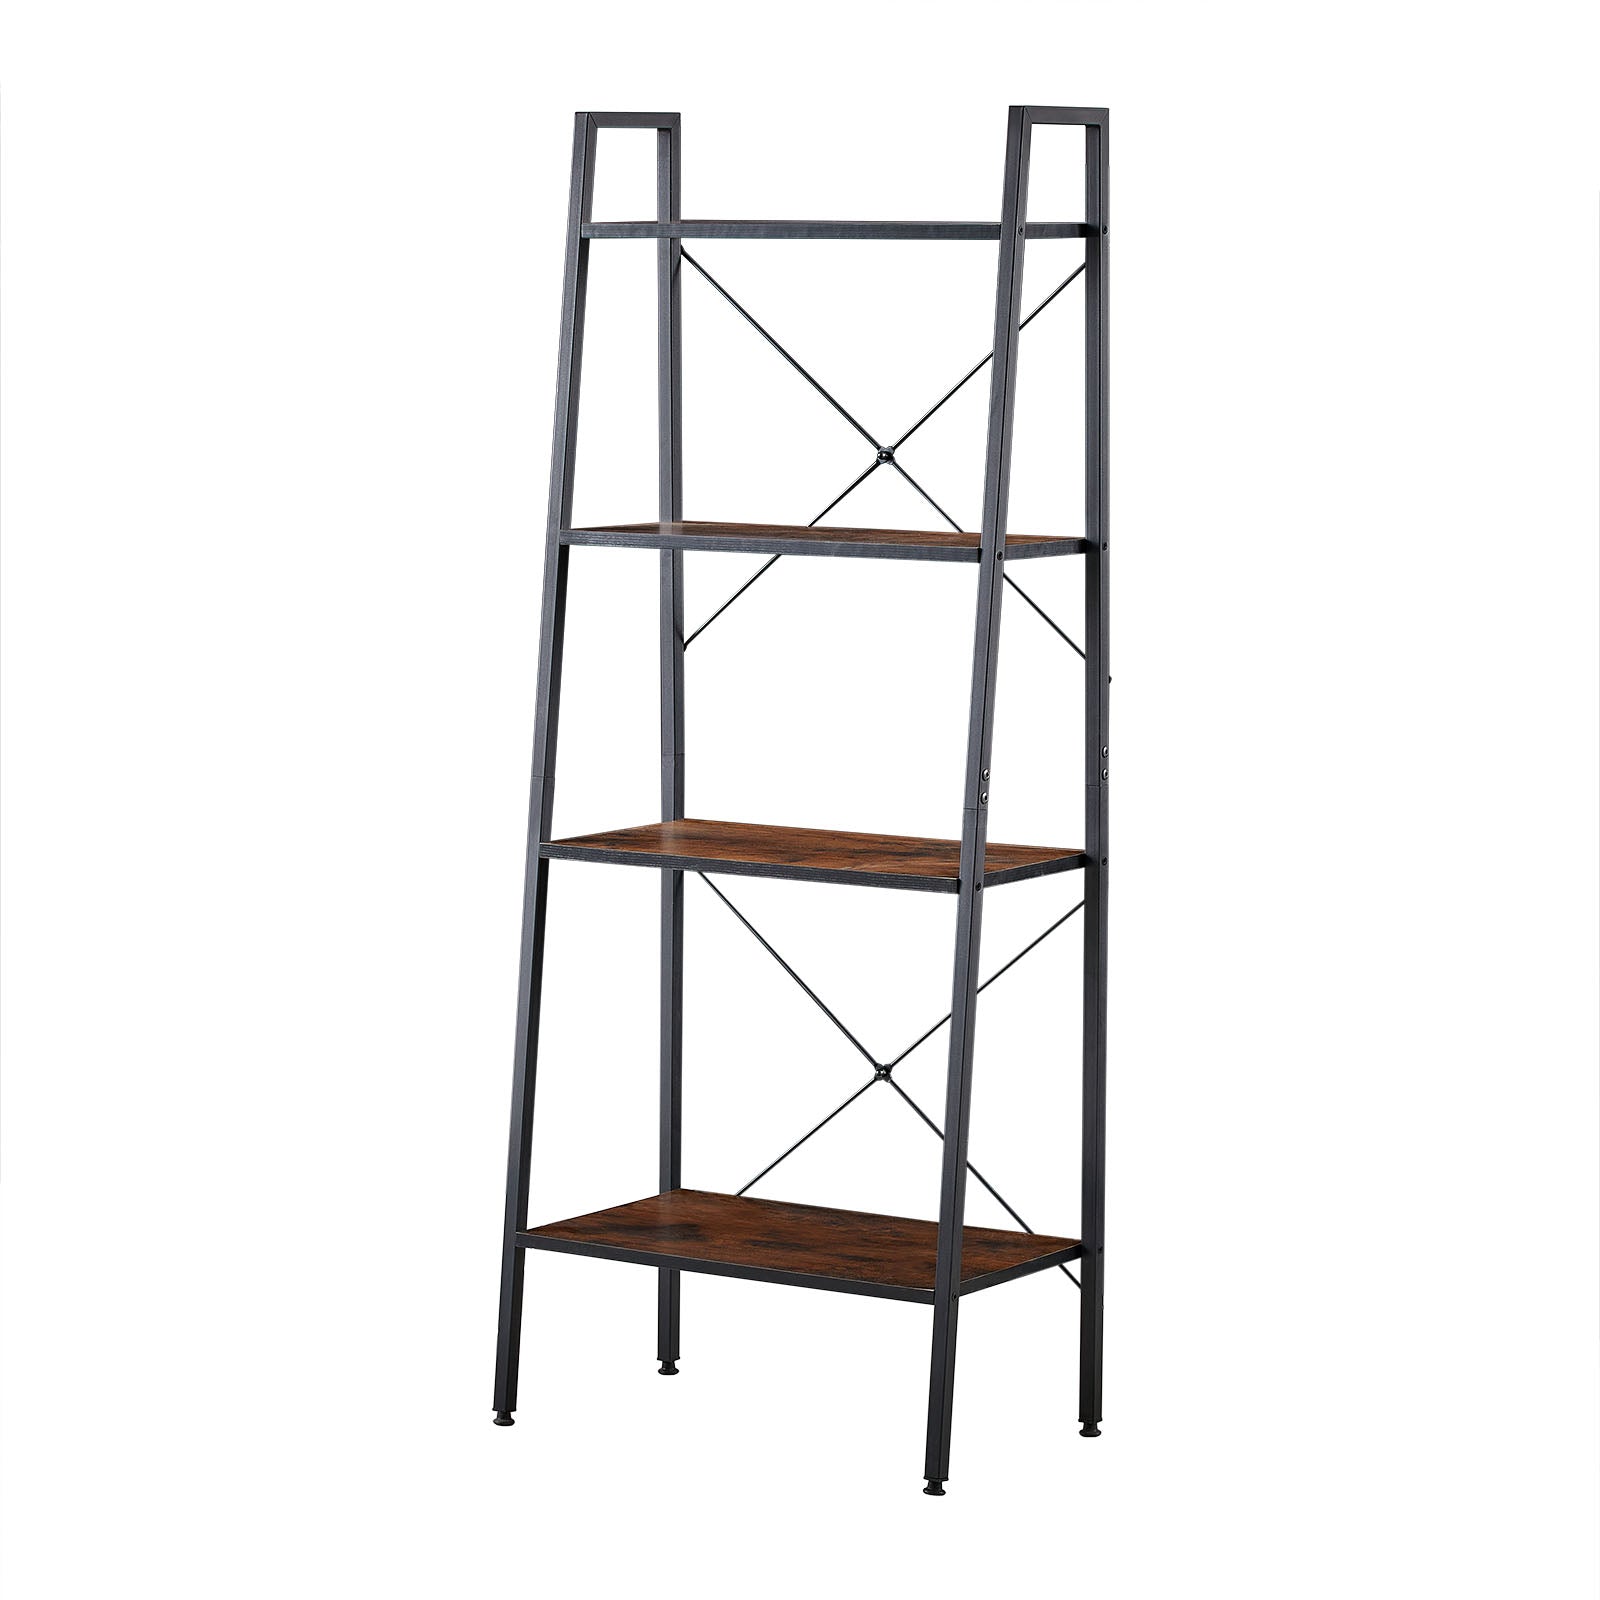 GRAPE 4-Tier Ladder Shelf with Metal Frame - Rustic Brown